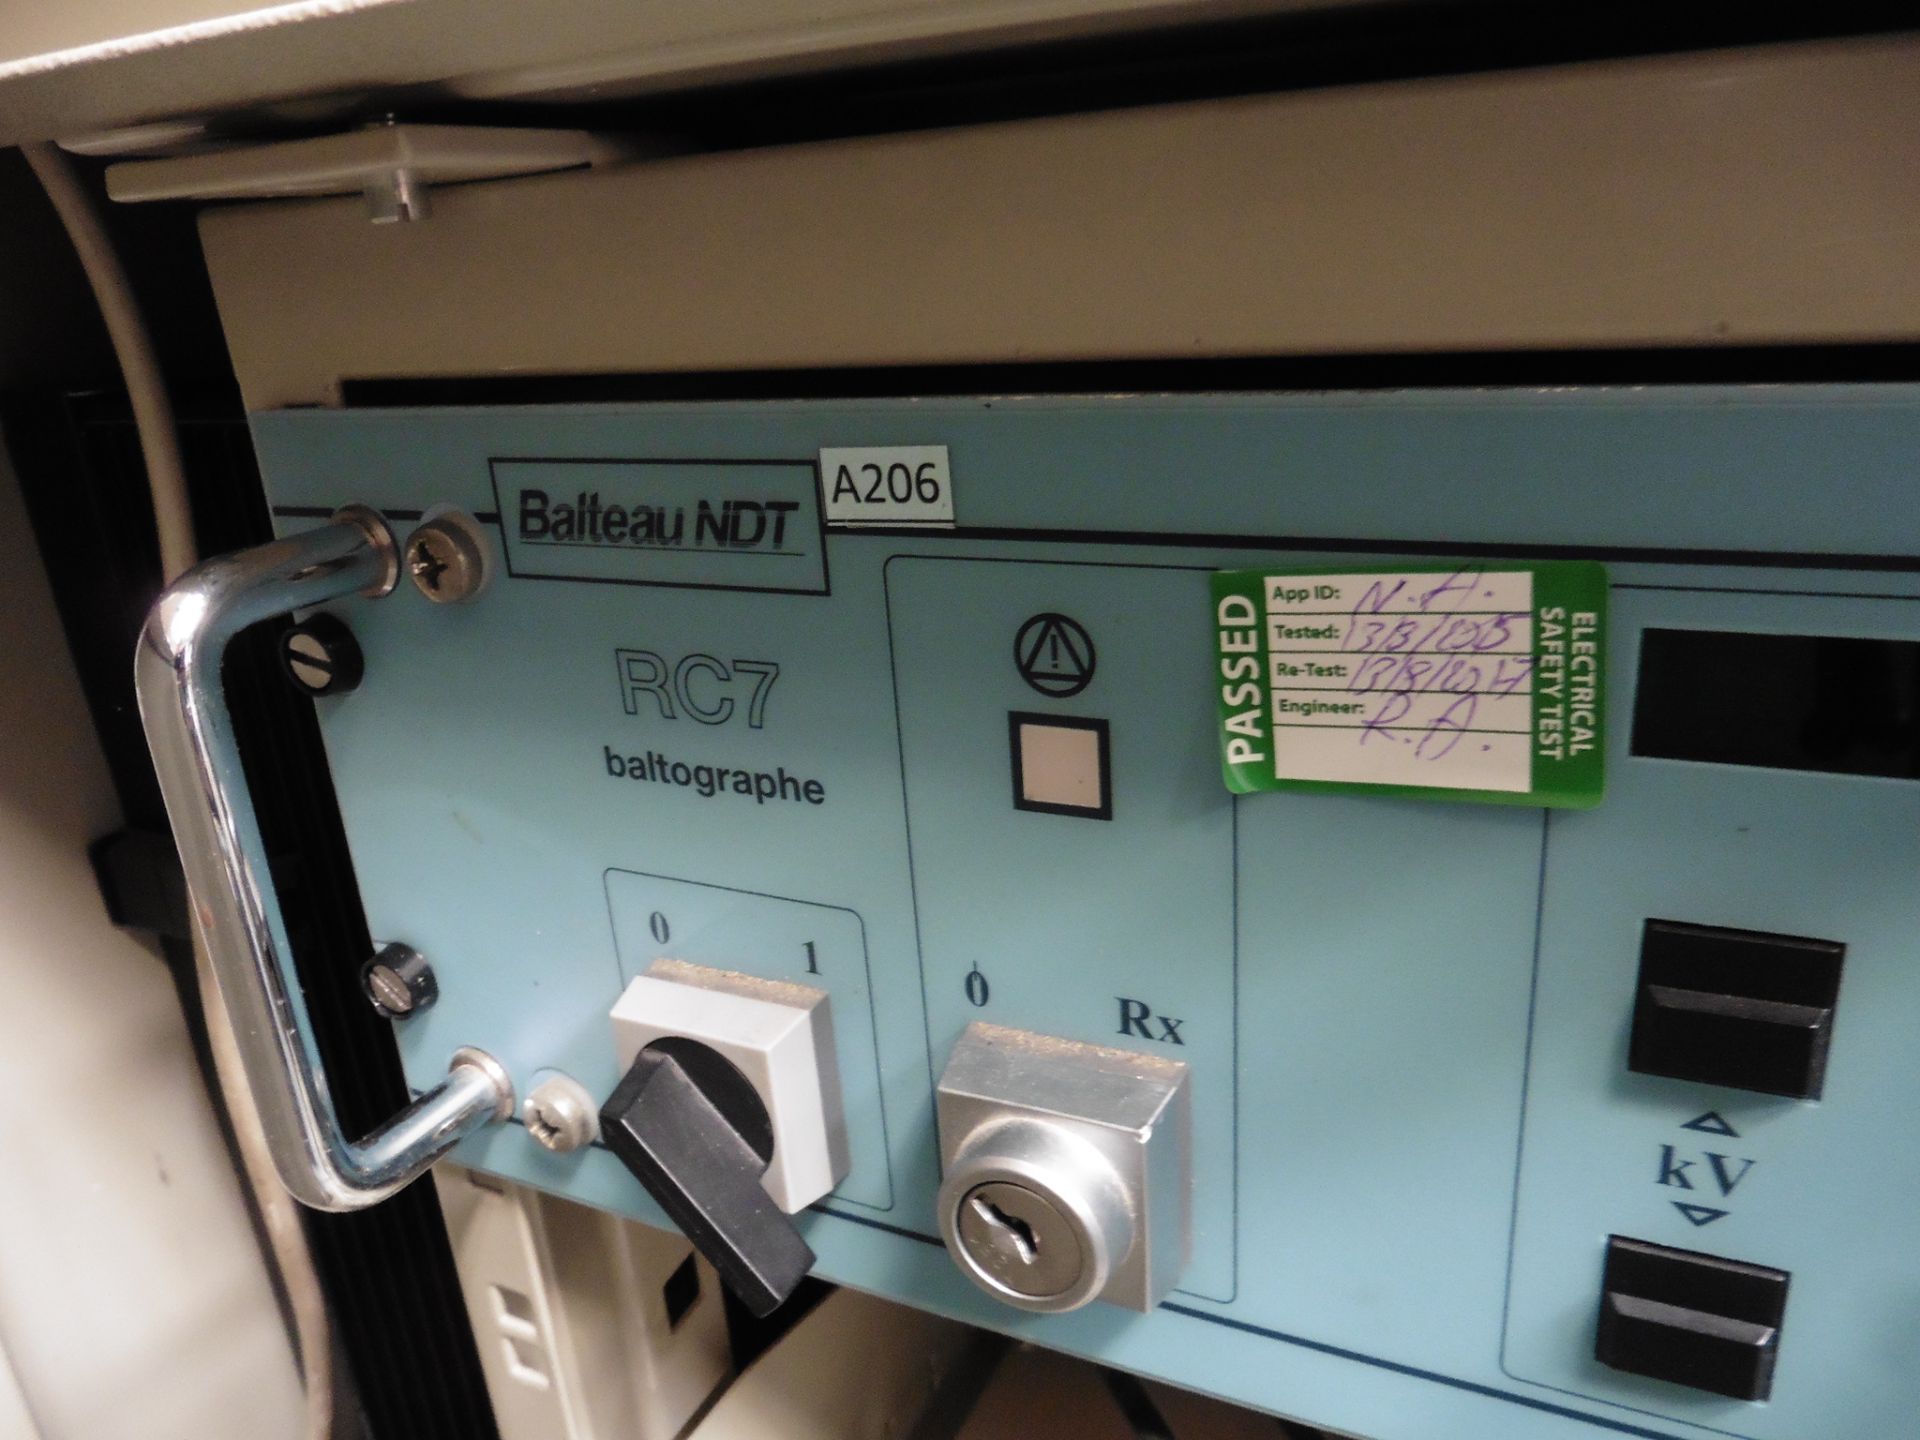 Balteau graphic generator 160KV cathodic industrial X-Ray generator max power 400 watt wired for - Image 11 of 12